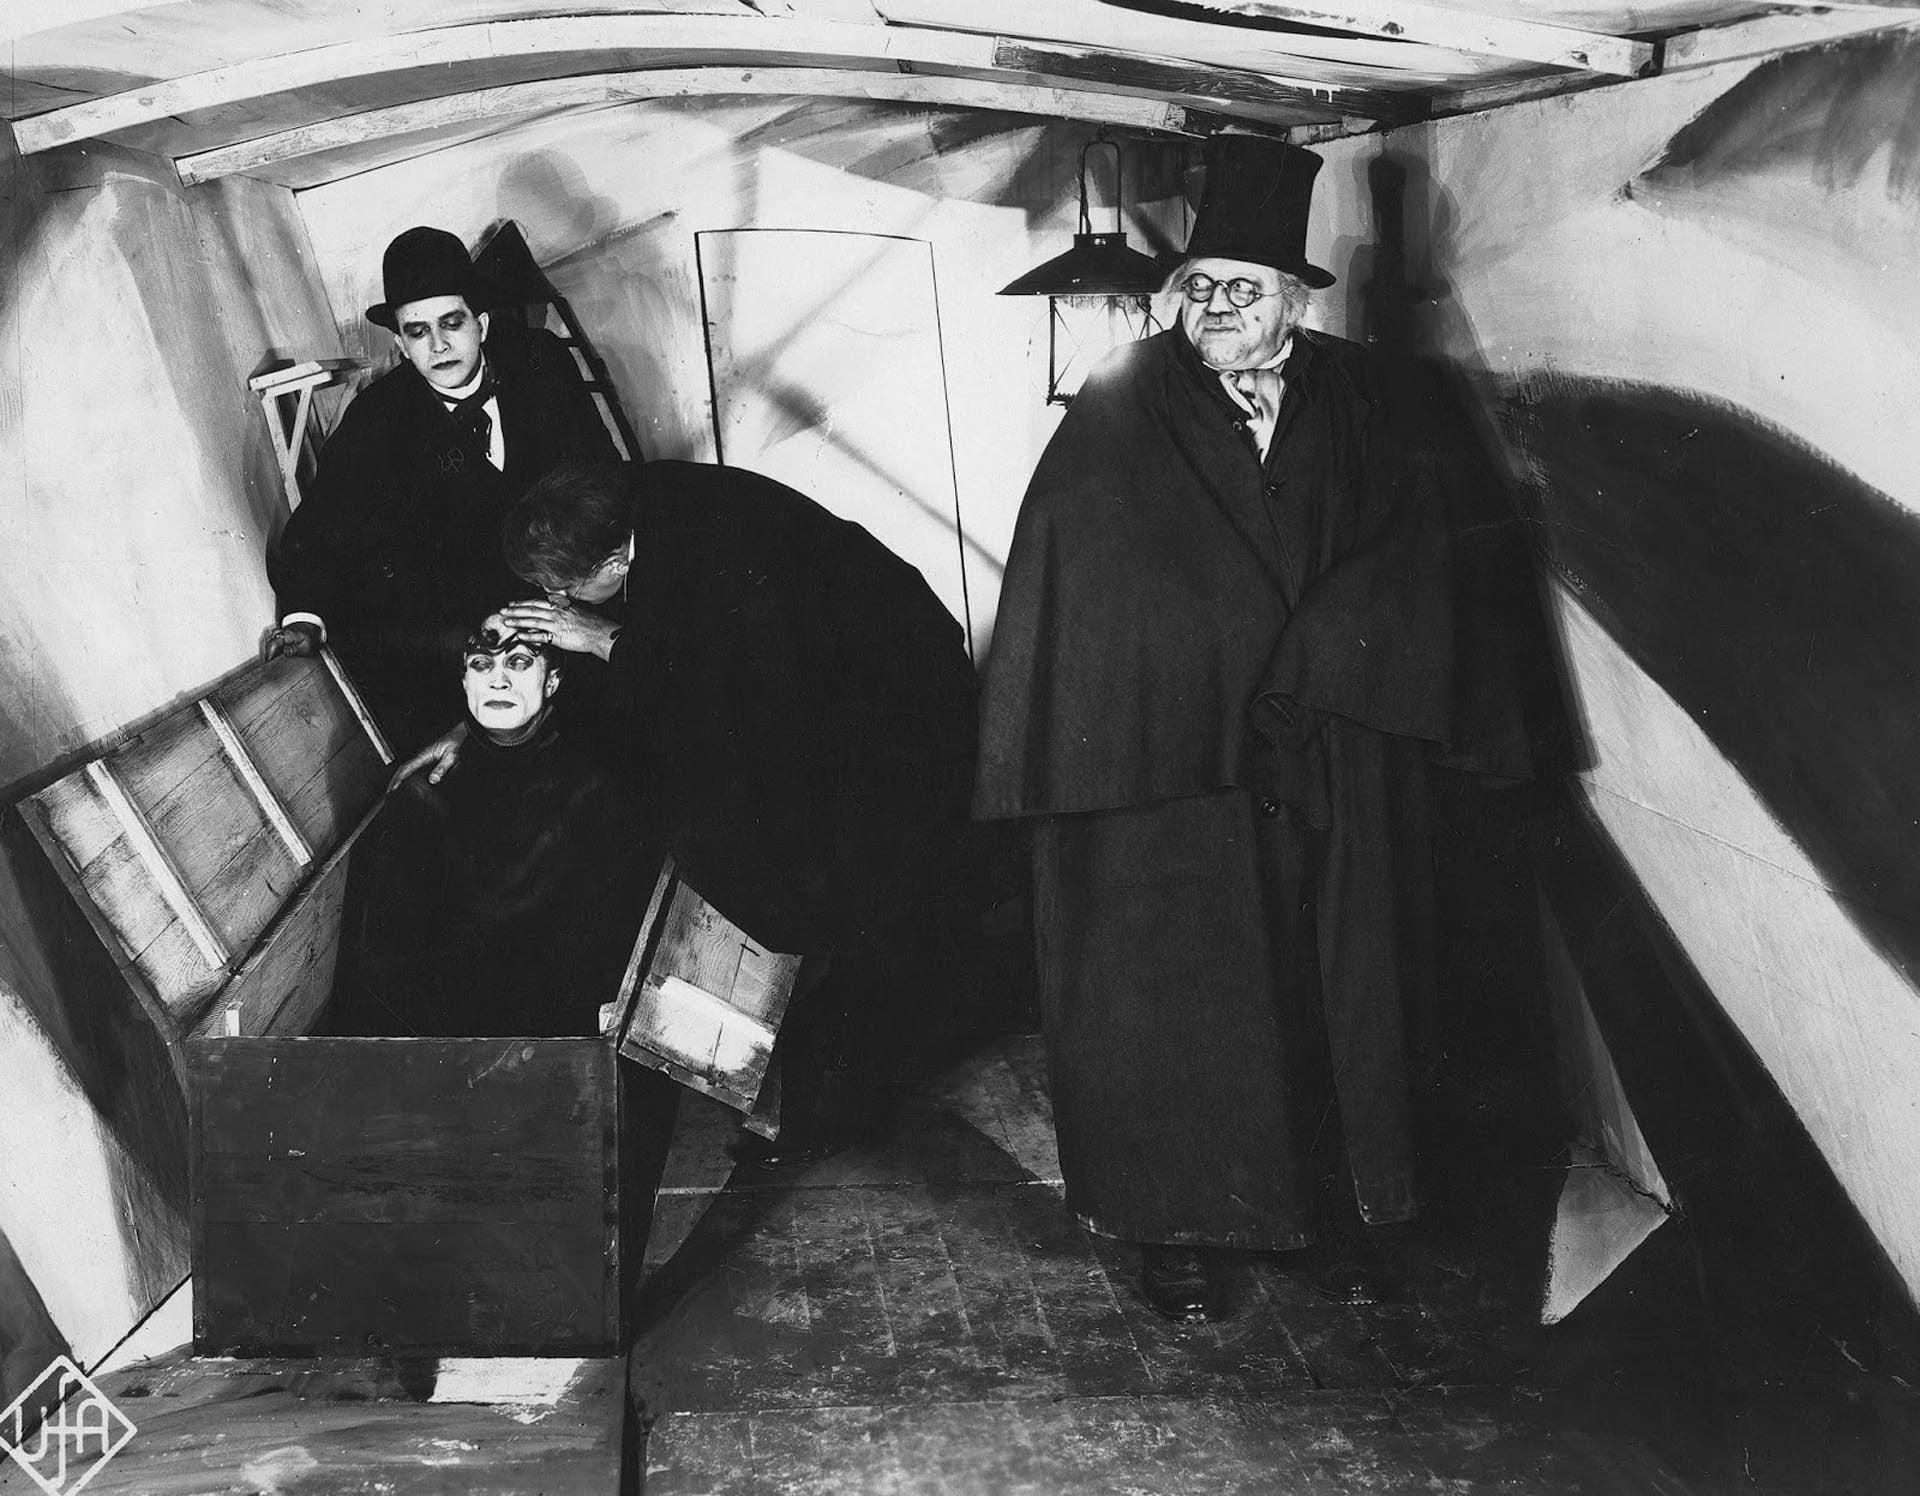 El gabinete del Dr Caligari